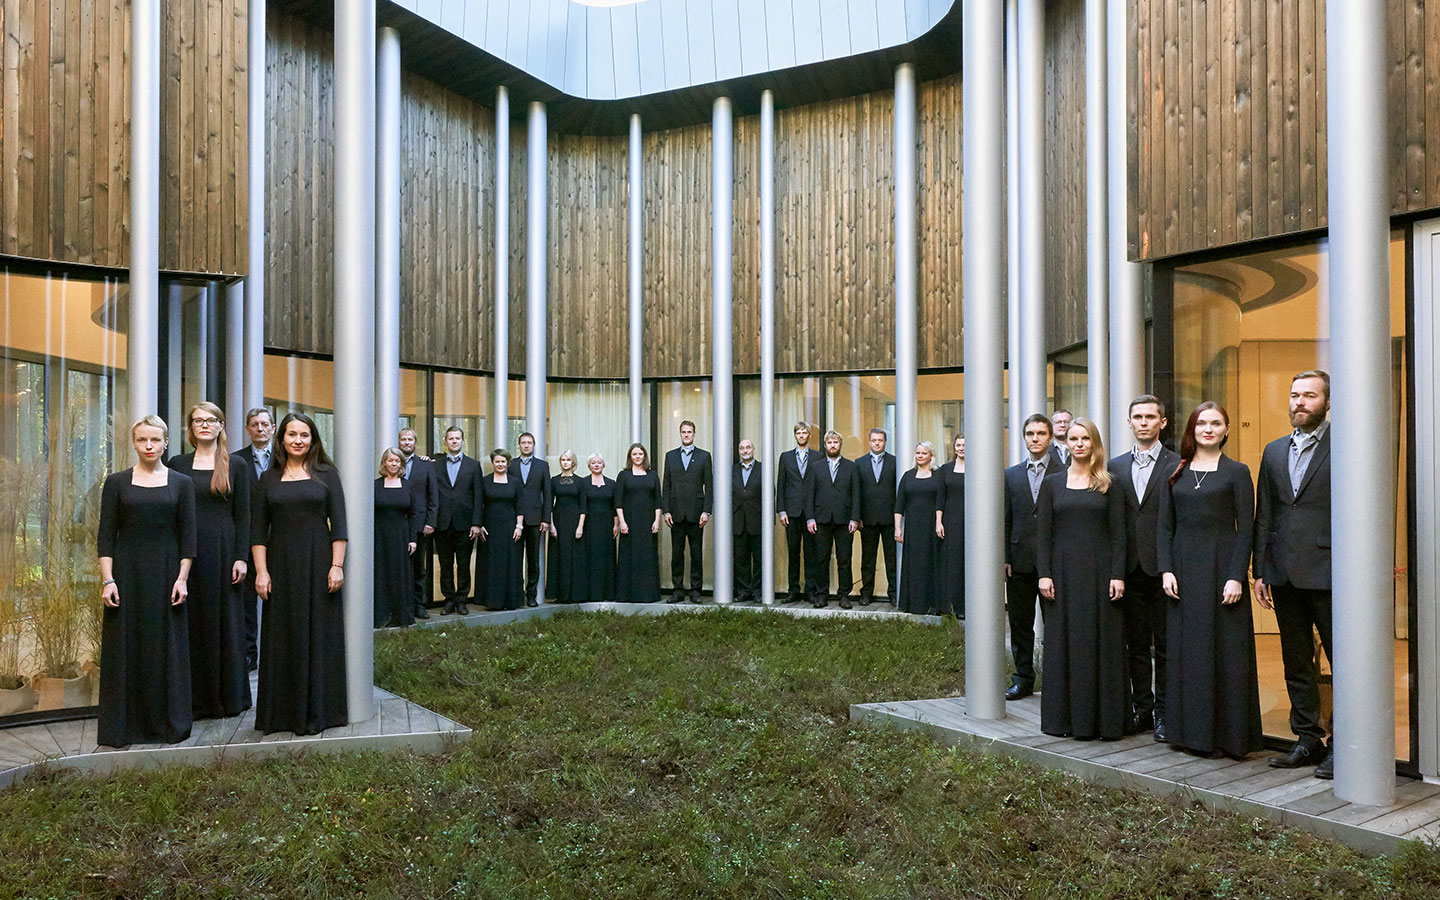 The Estonian Philharmonic Chamber Choir standing between the pillars of a building